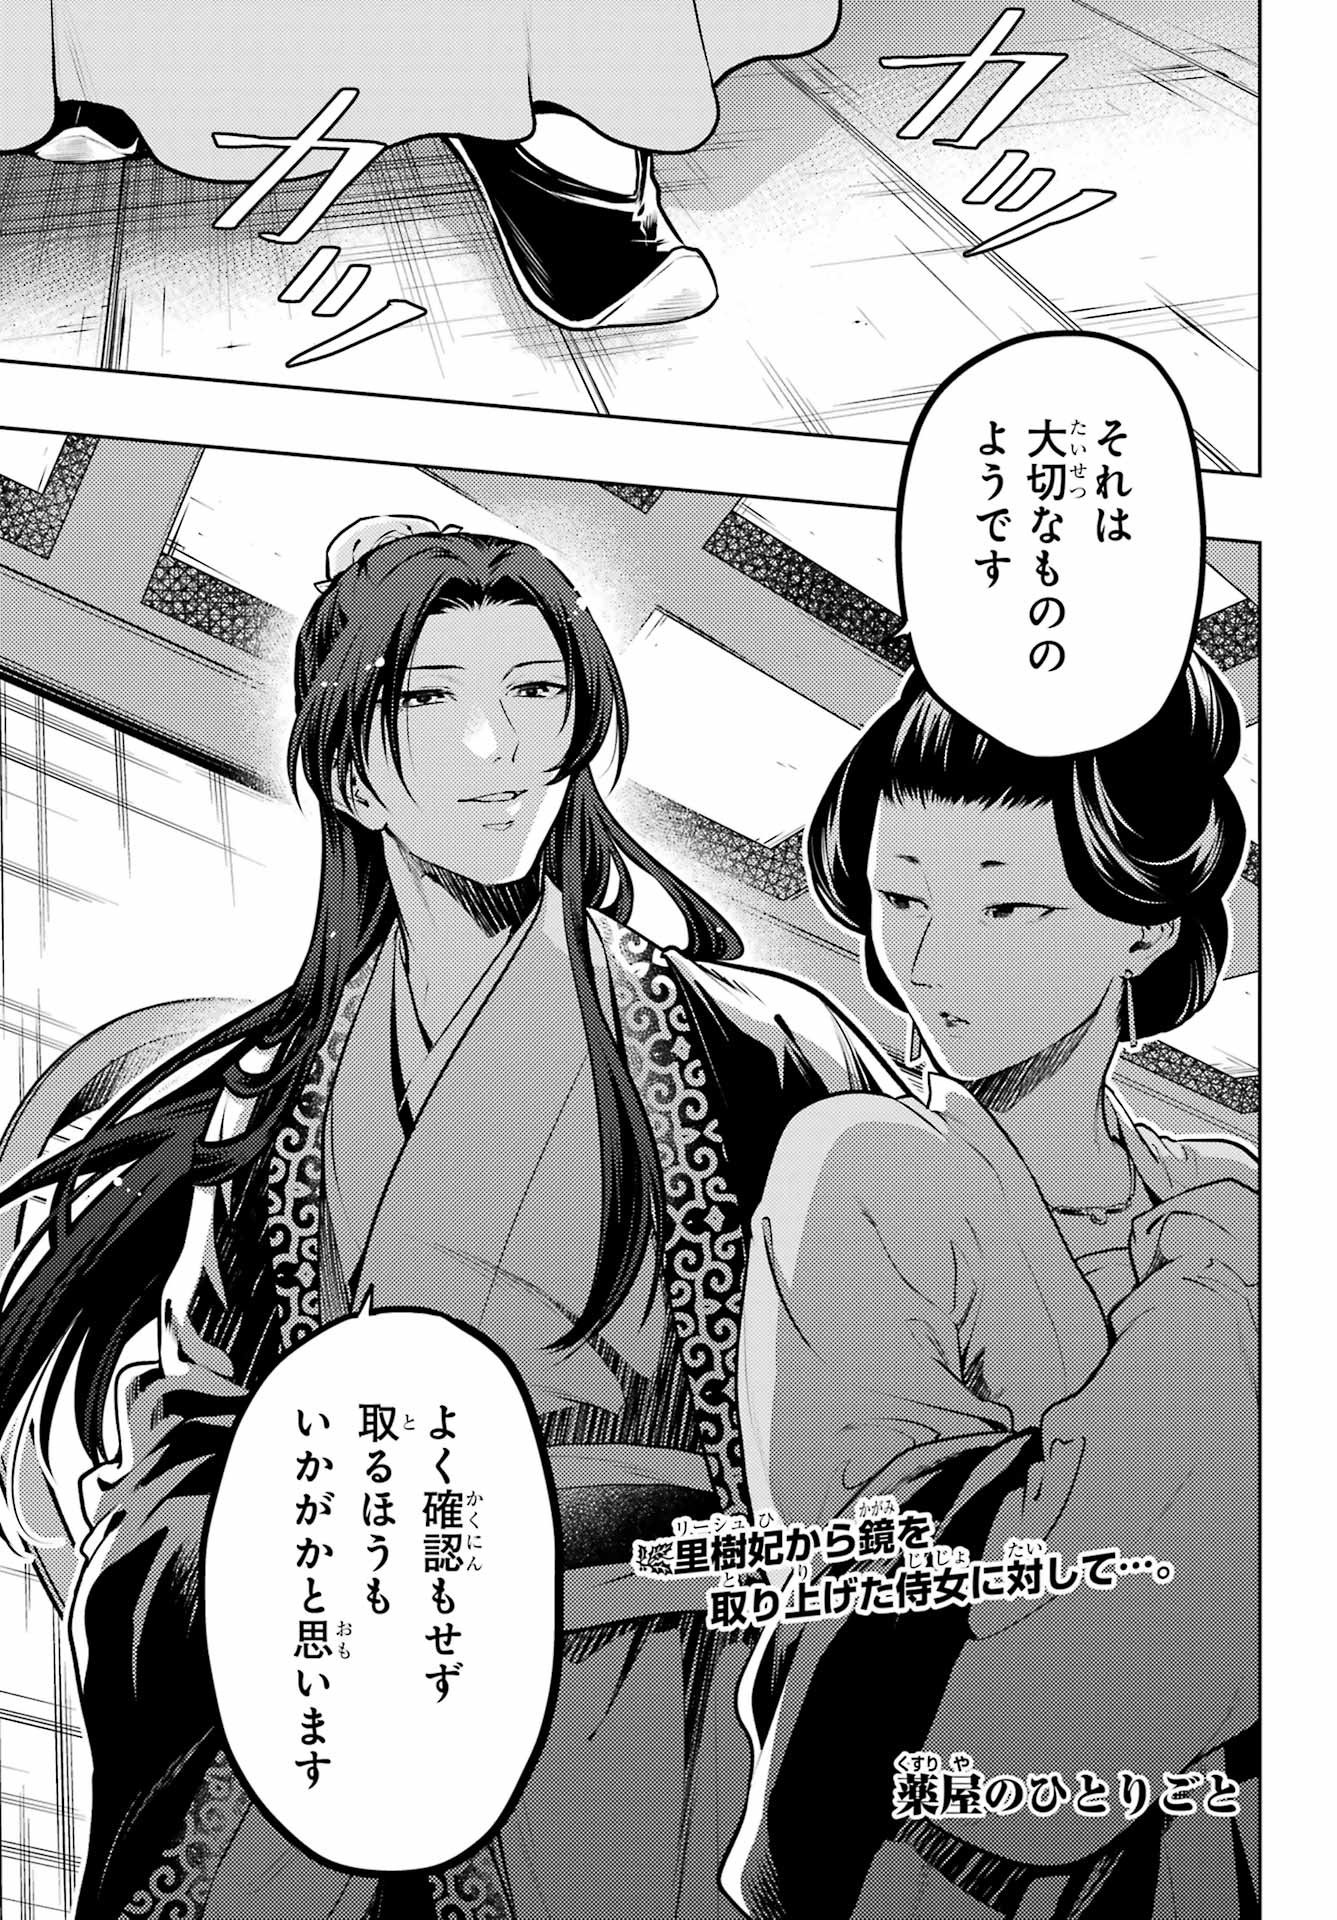 Kusuriya no Hitorigoto - Chapter 68 - Page 1